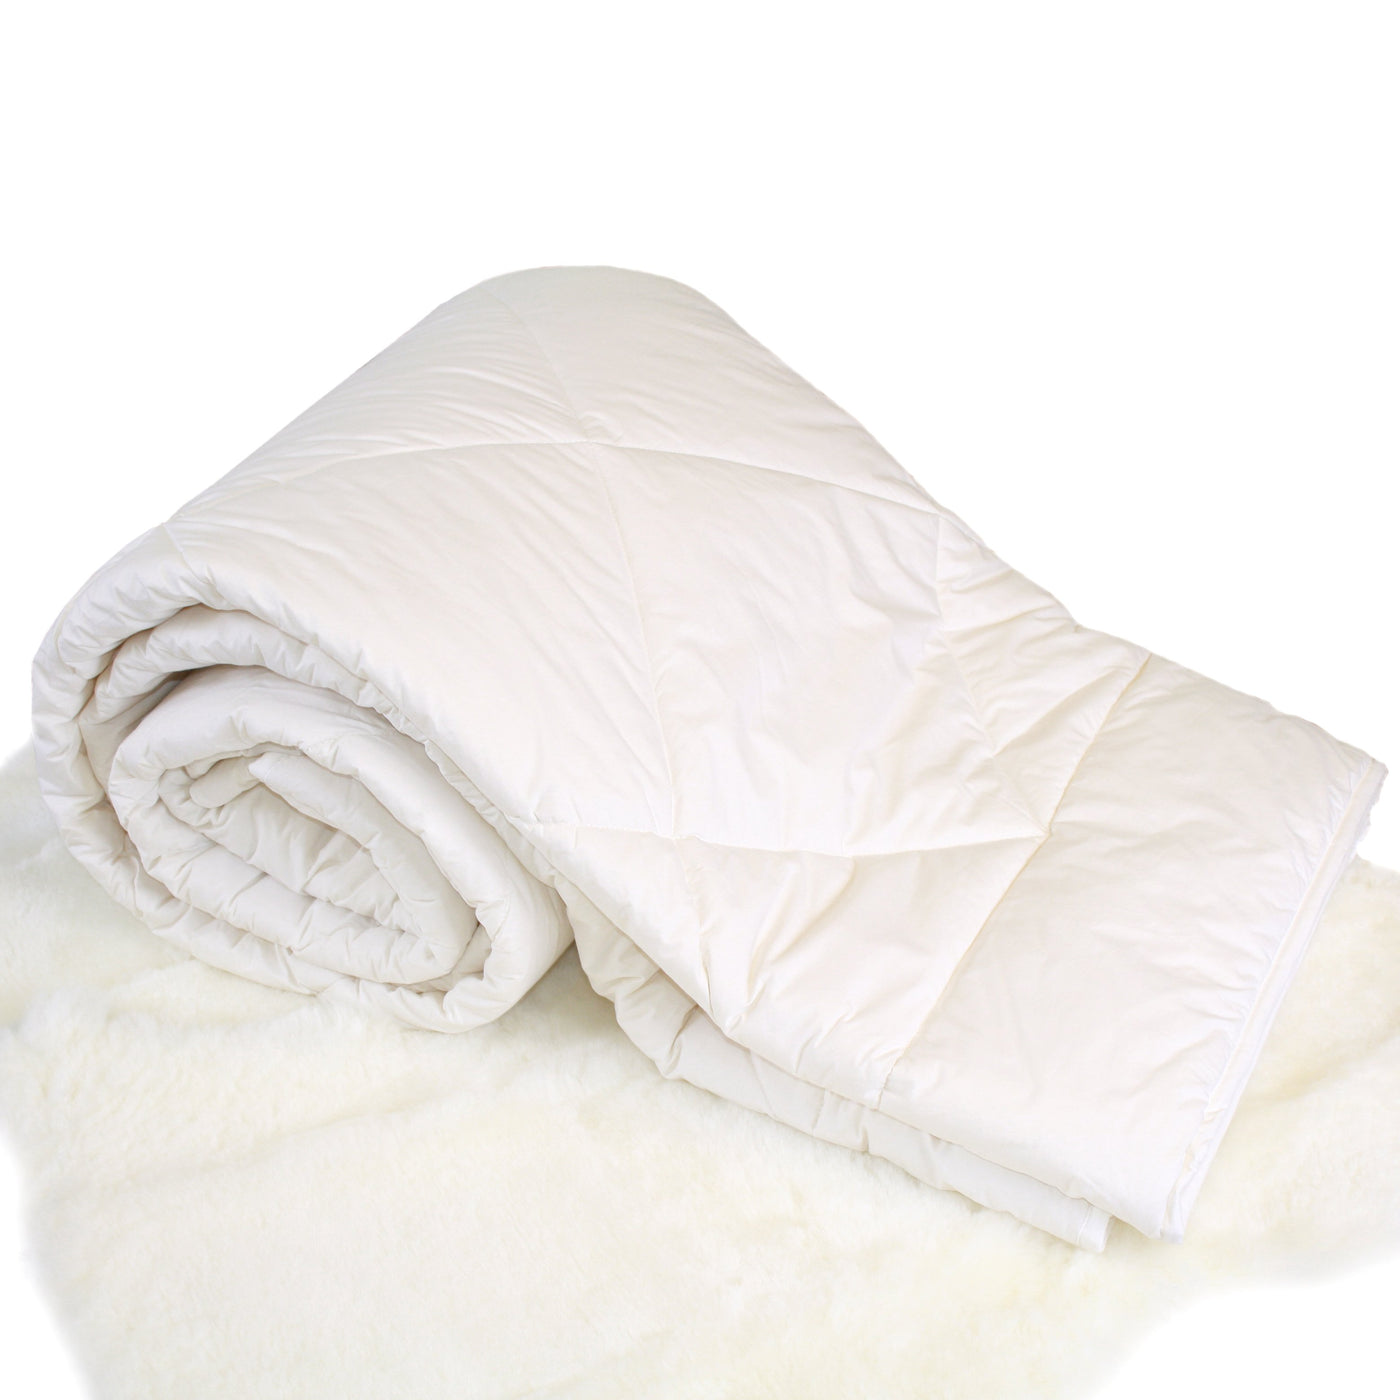 Imperfect Wool Comforter, Crib or Toddler